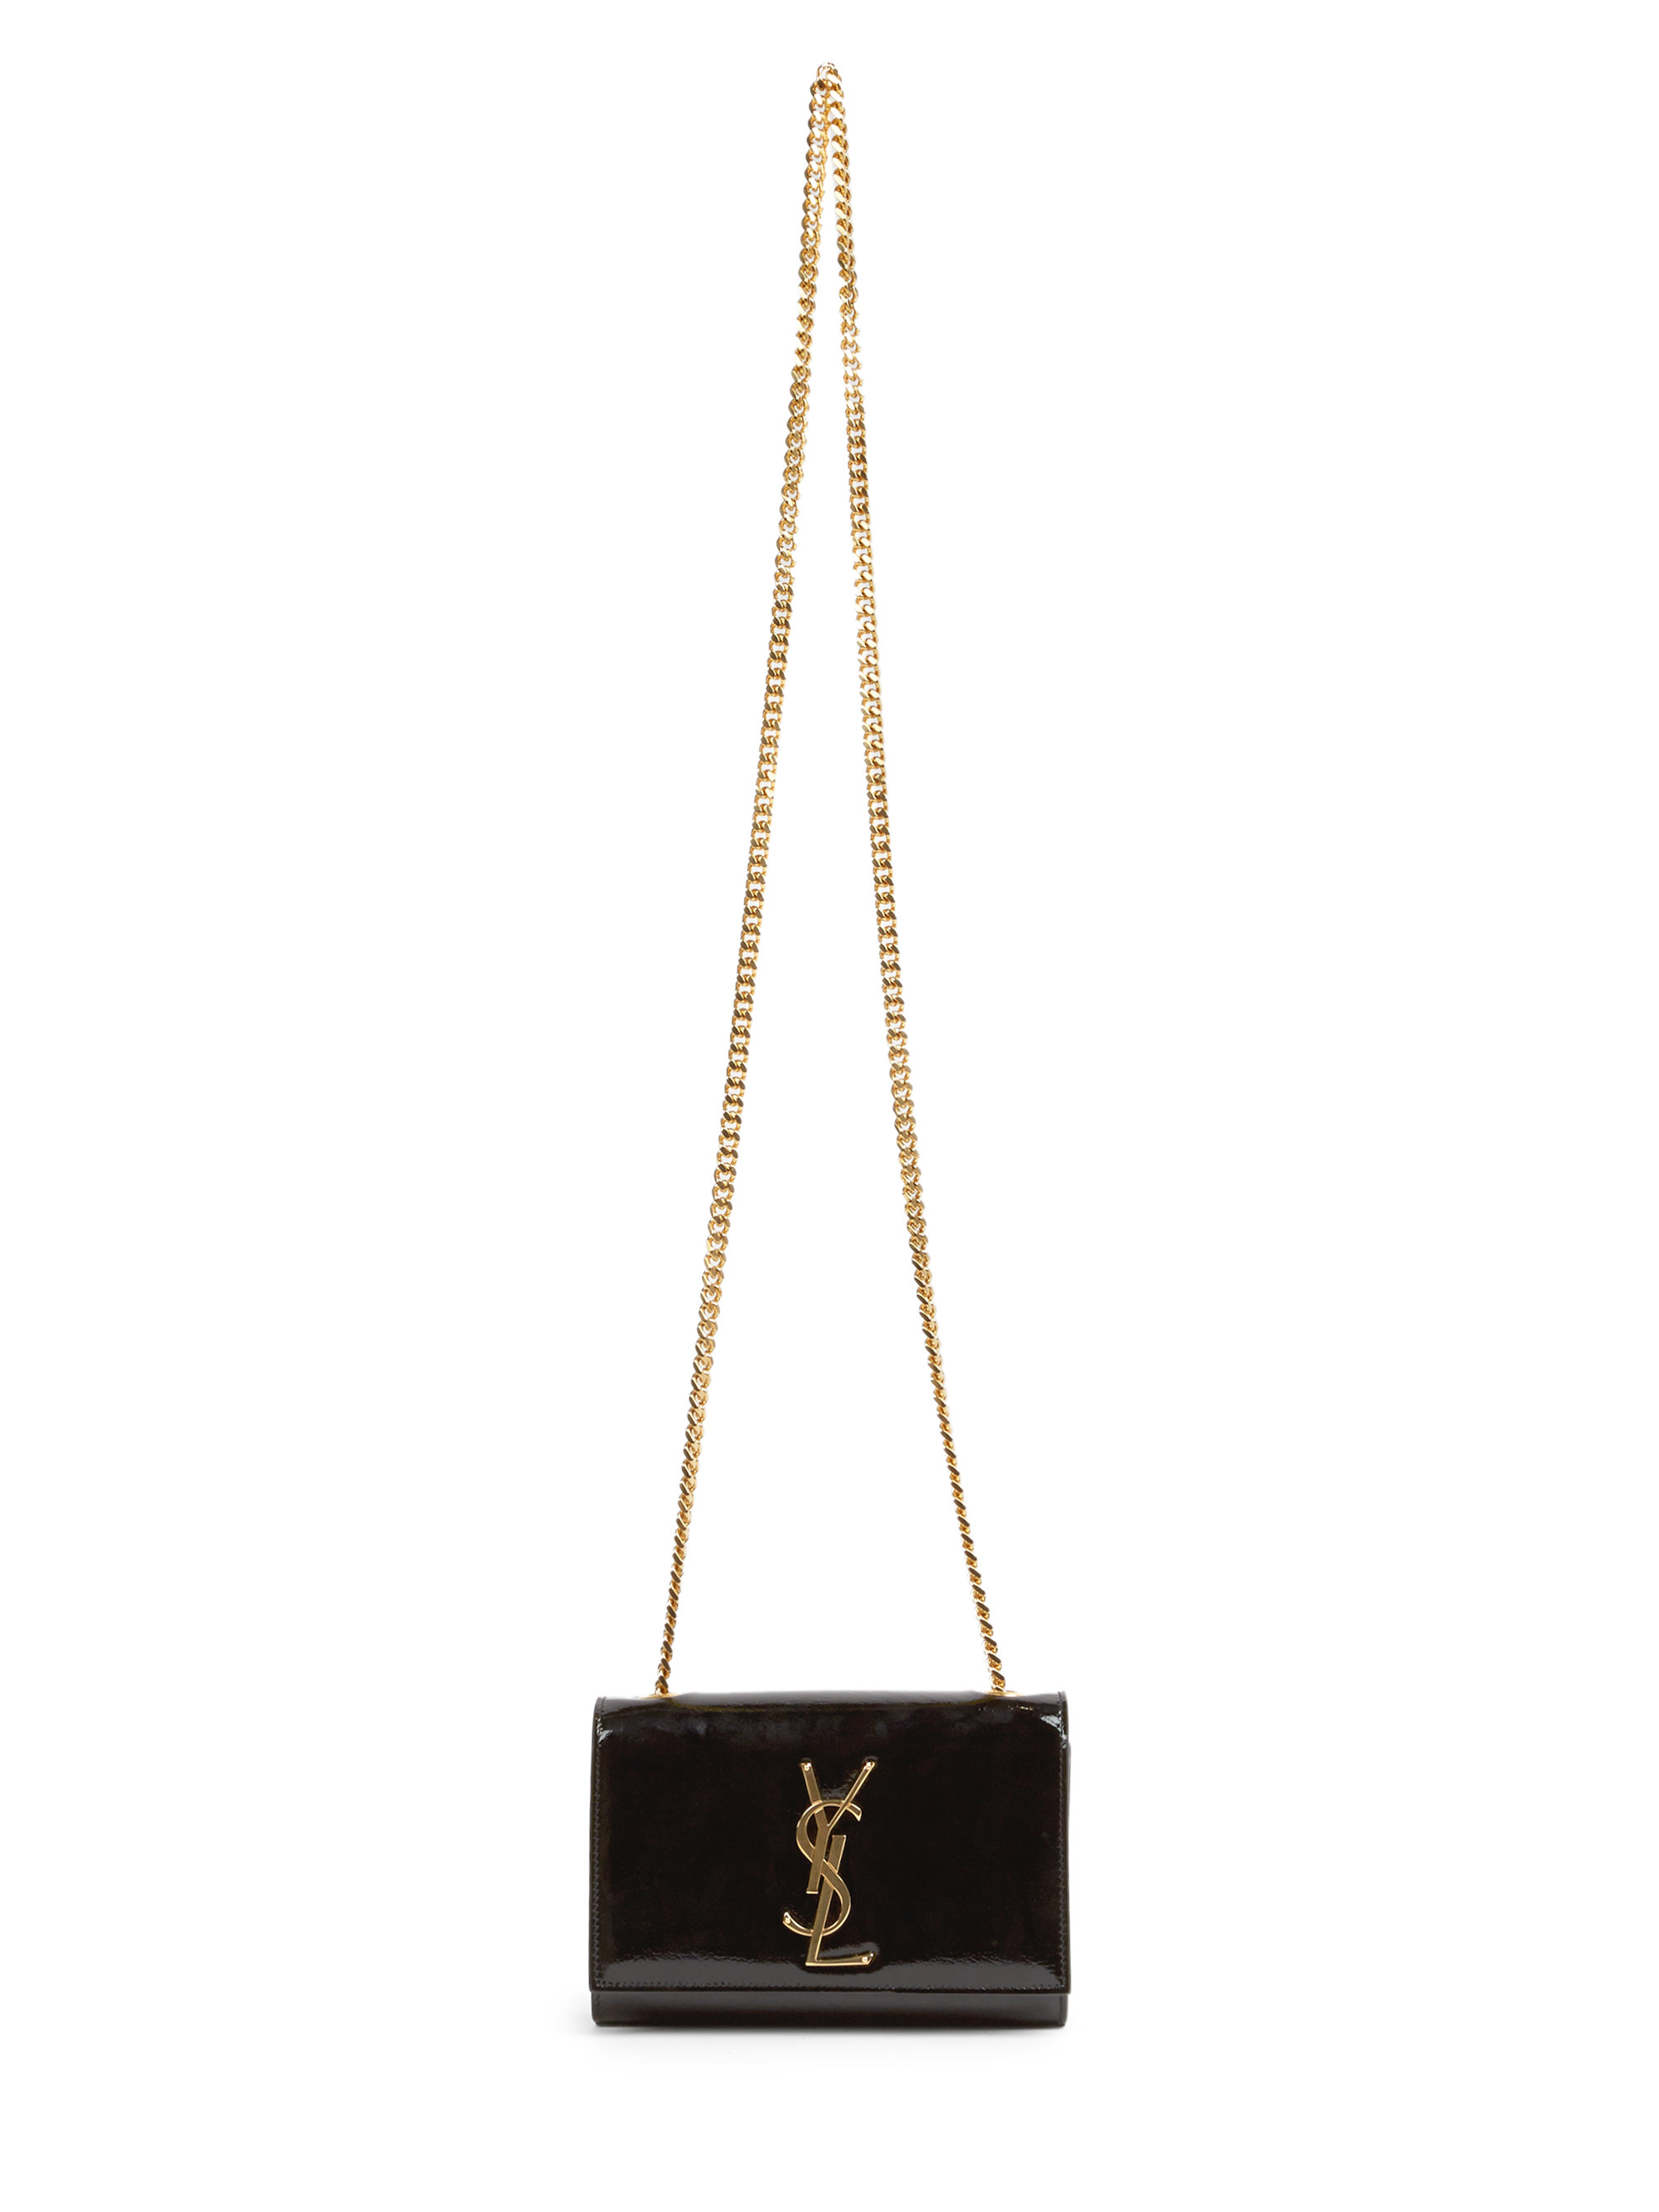 school belle satchel bag - Saint laurent Monogram Small Patent Leather Crossbody Bag in Black ...